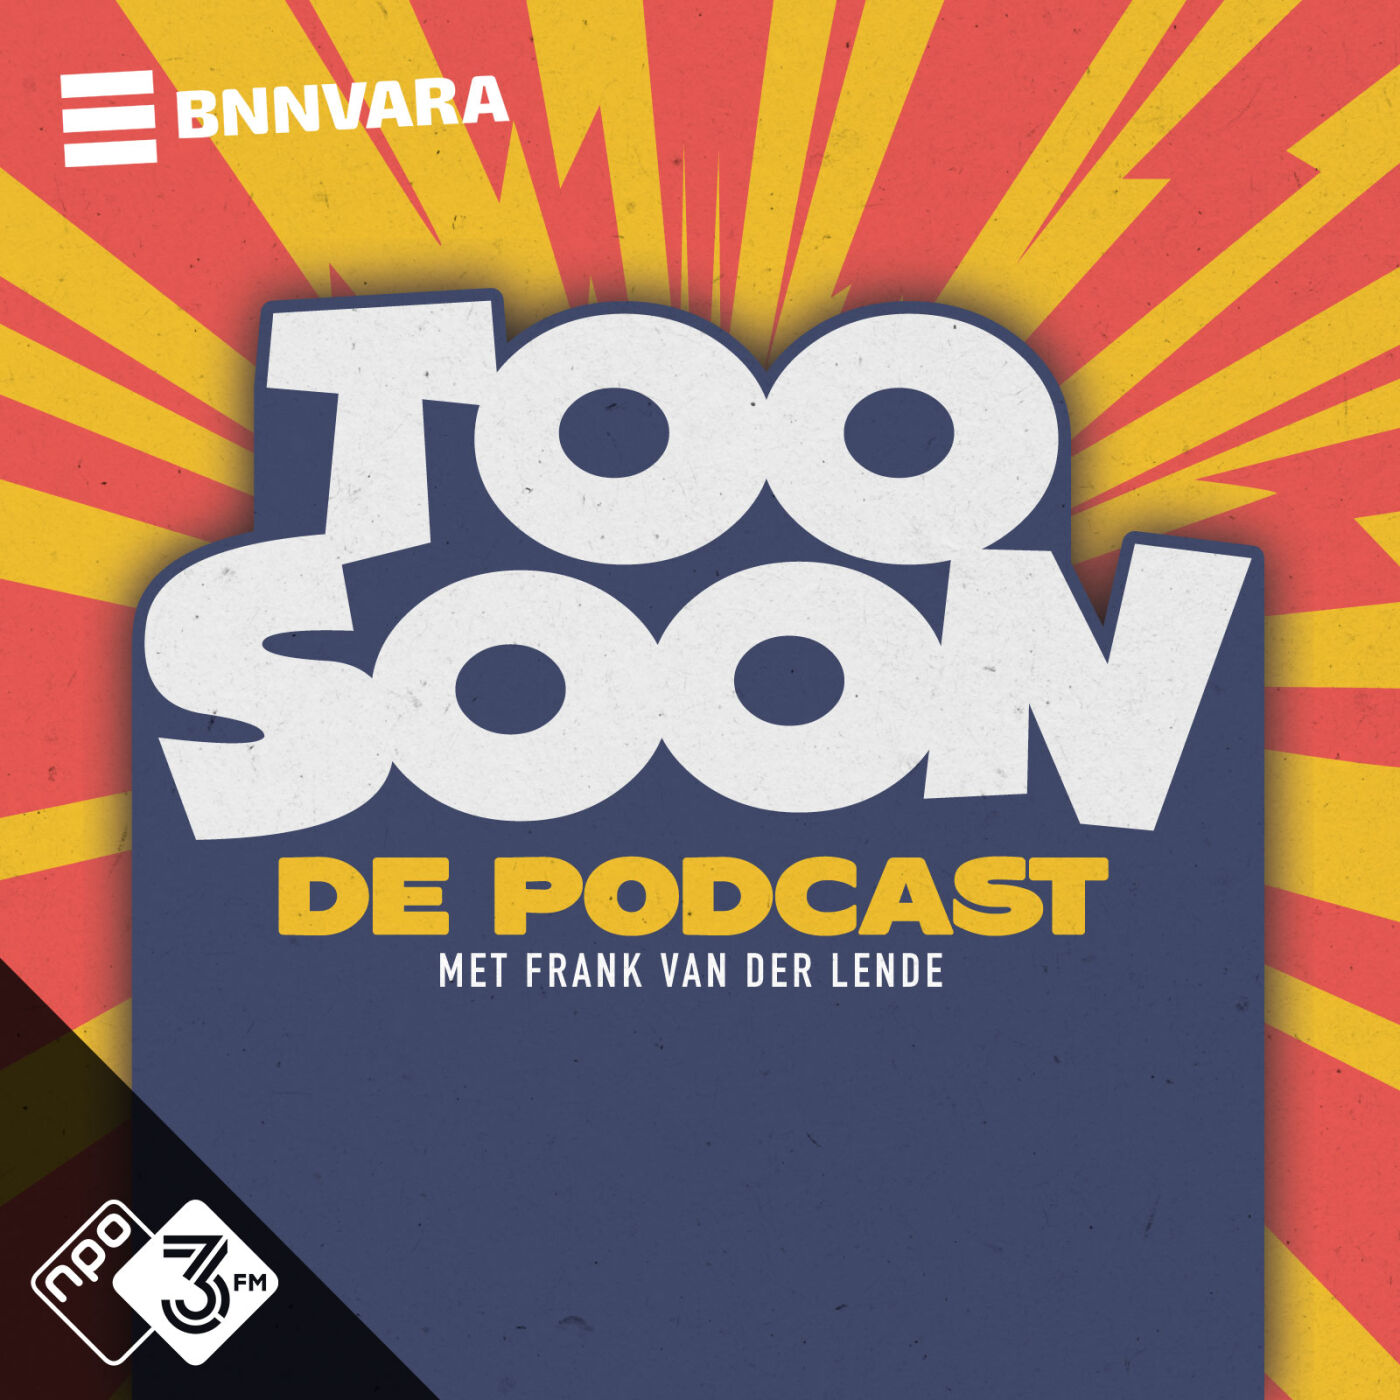 Too Soon de Podcast logo